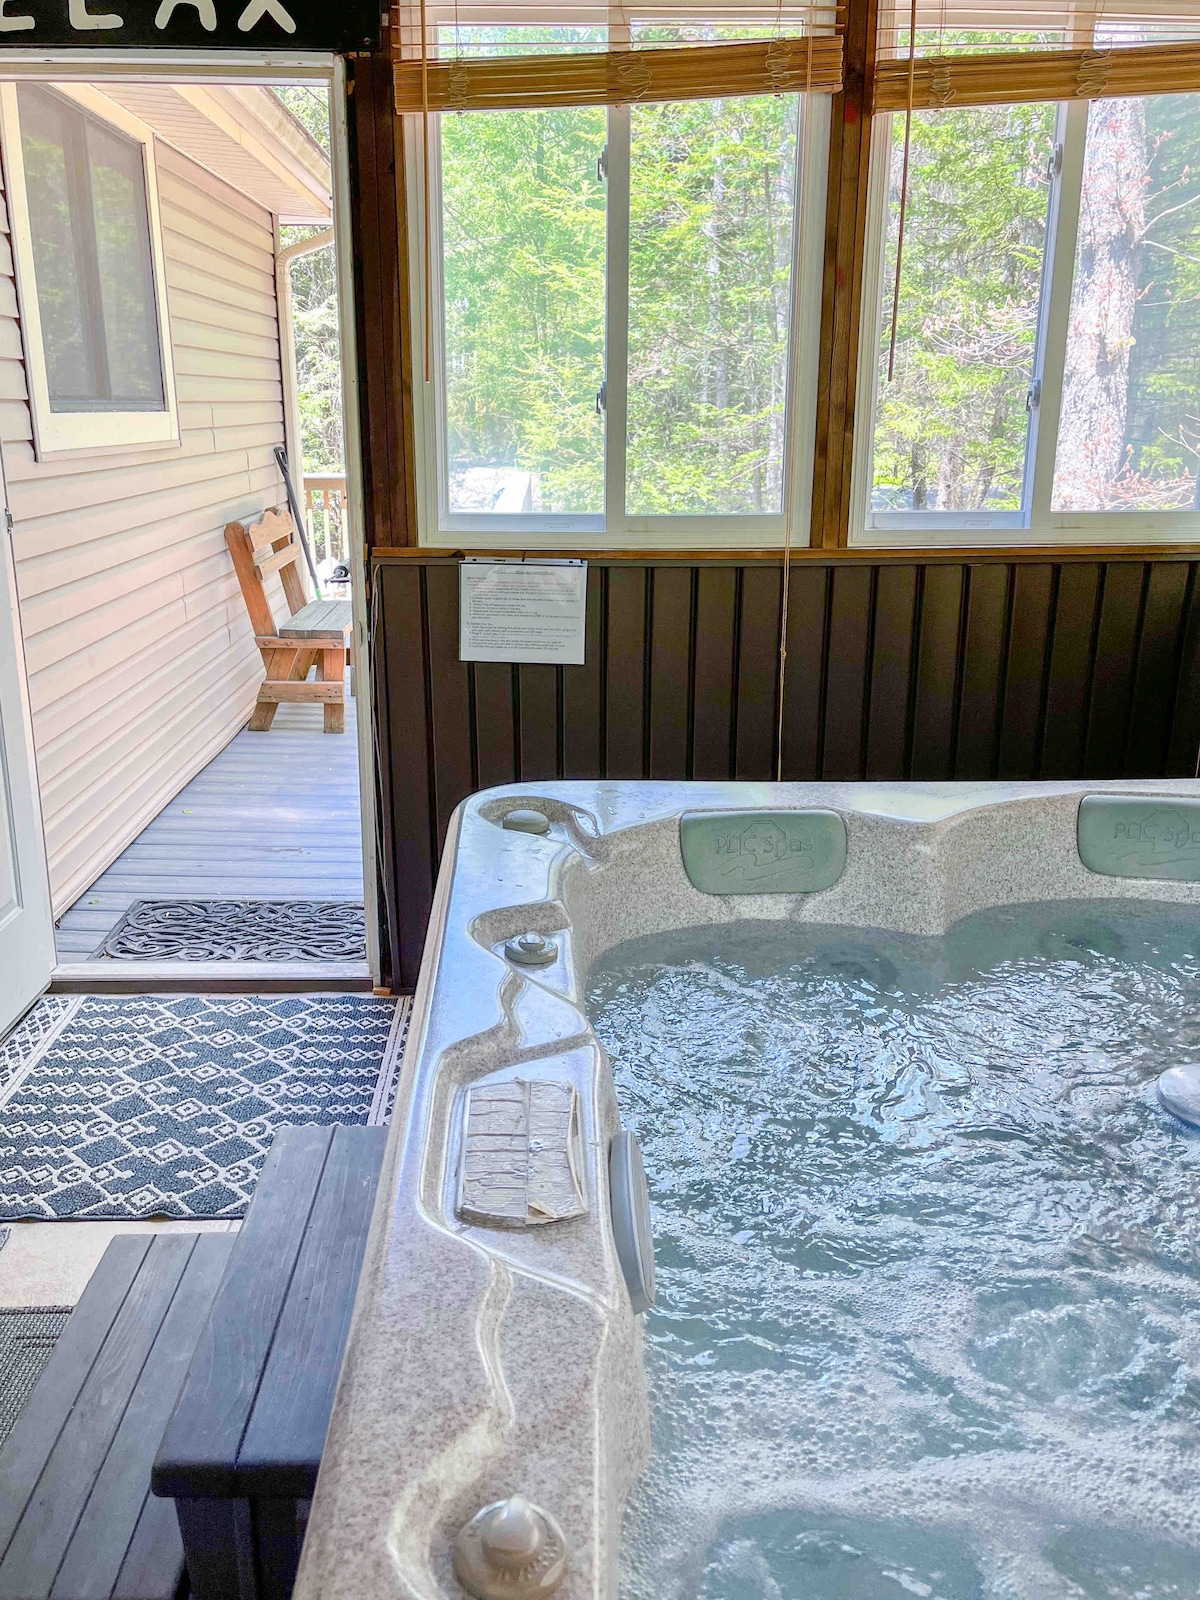 Jim Thorpe Lake房源-热水浴缸和游戏室度假胜地